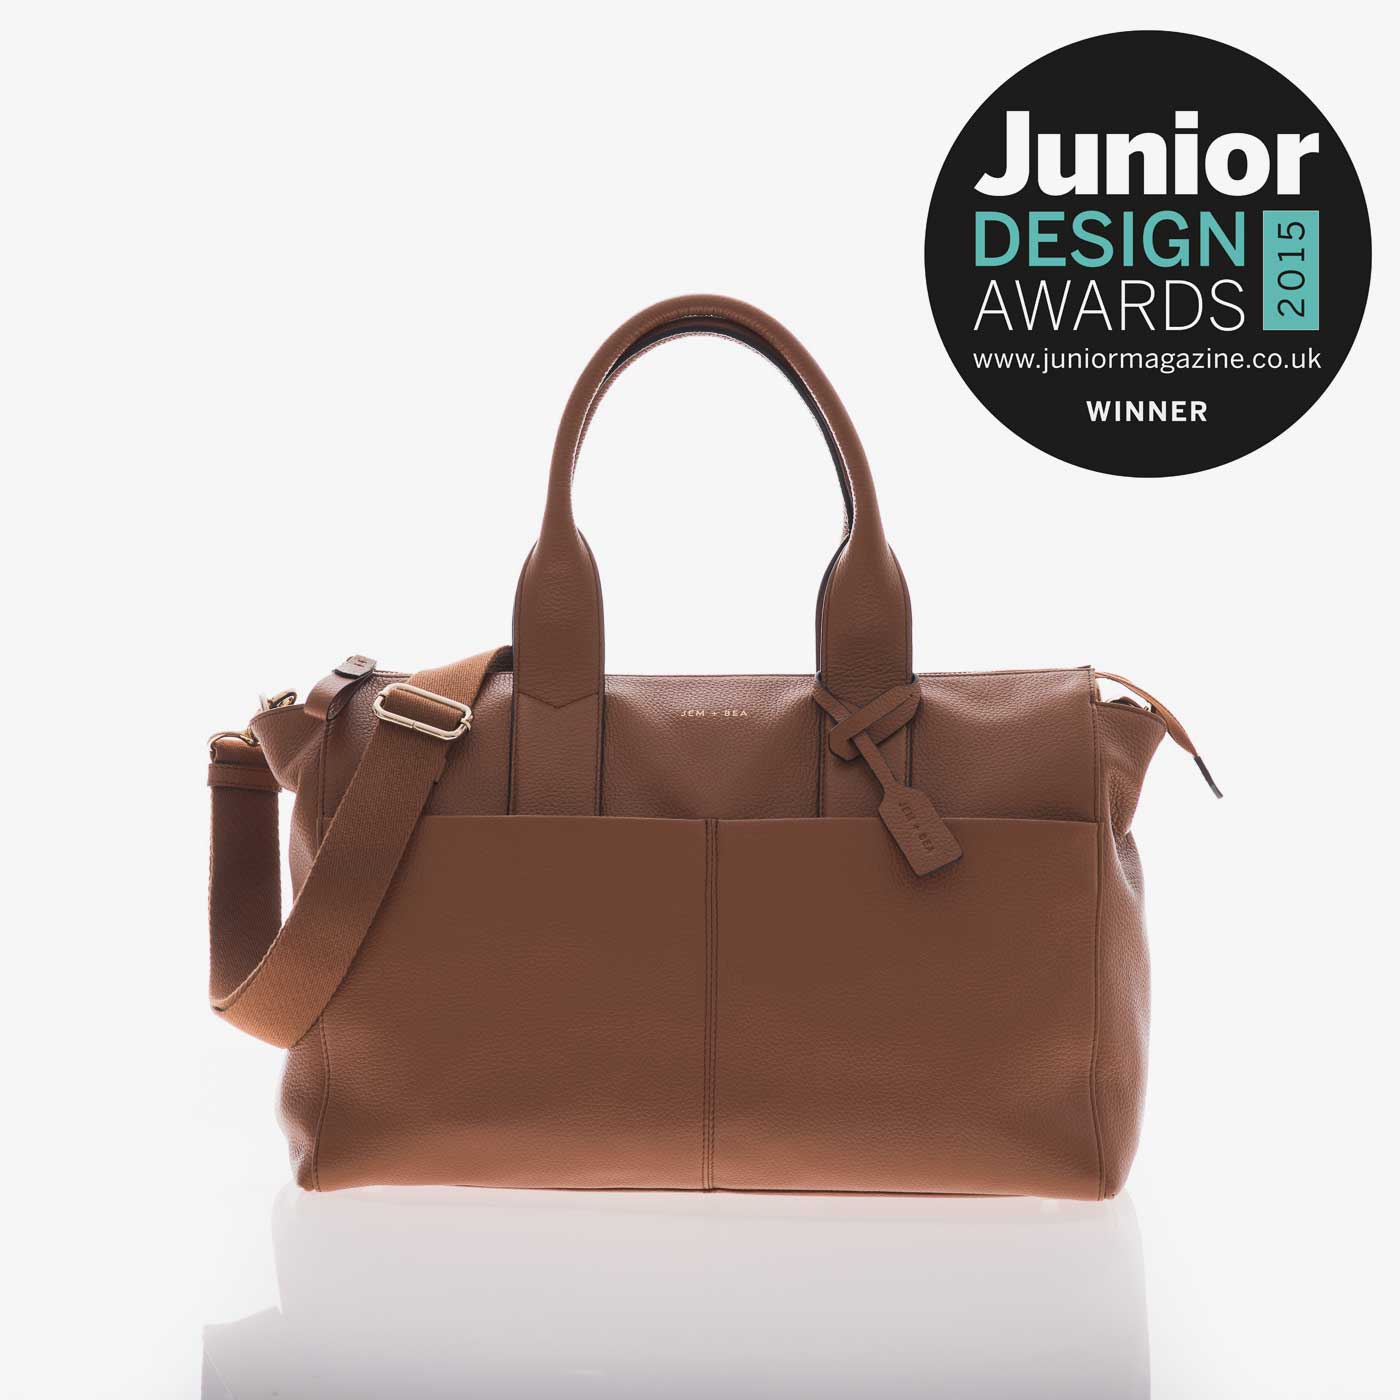 tan leather handbags uk